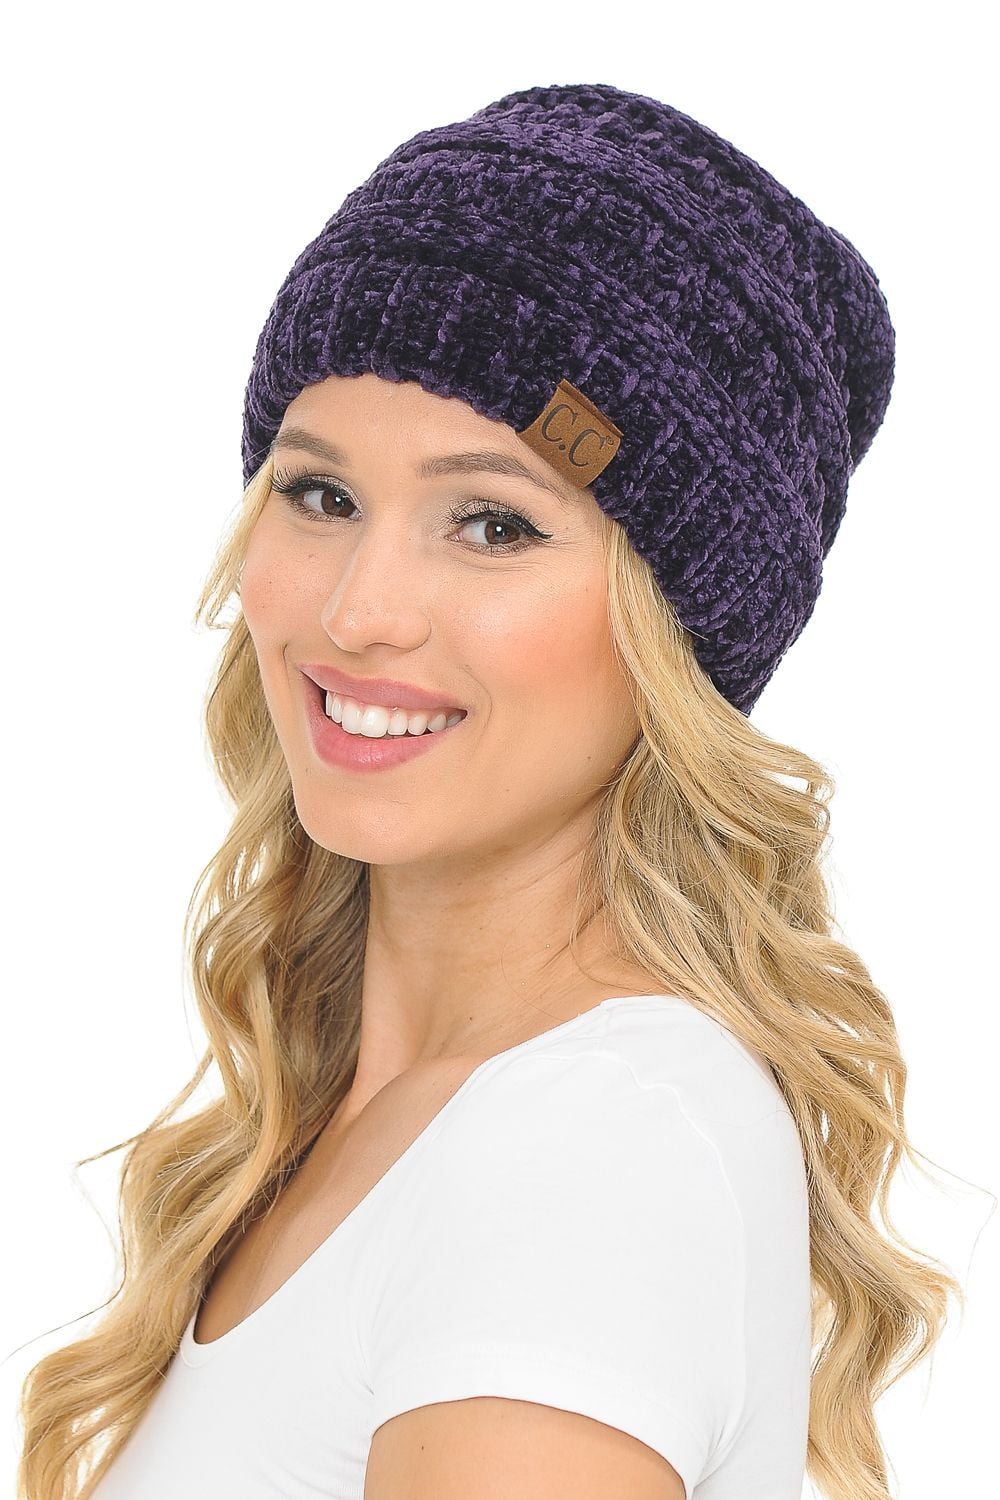 Summer-lavender Winter Hat for Women Hat Knitted Beanies Cap Hat Thick Women Skullies,Navy